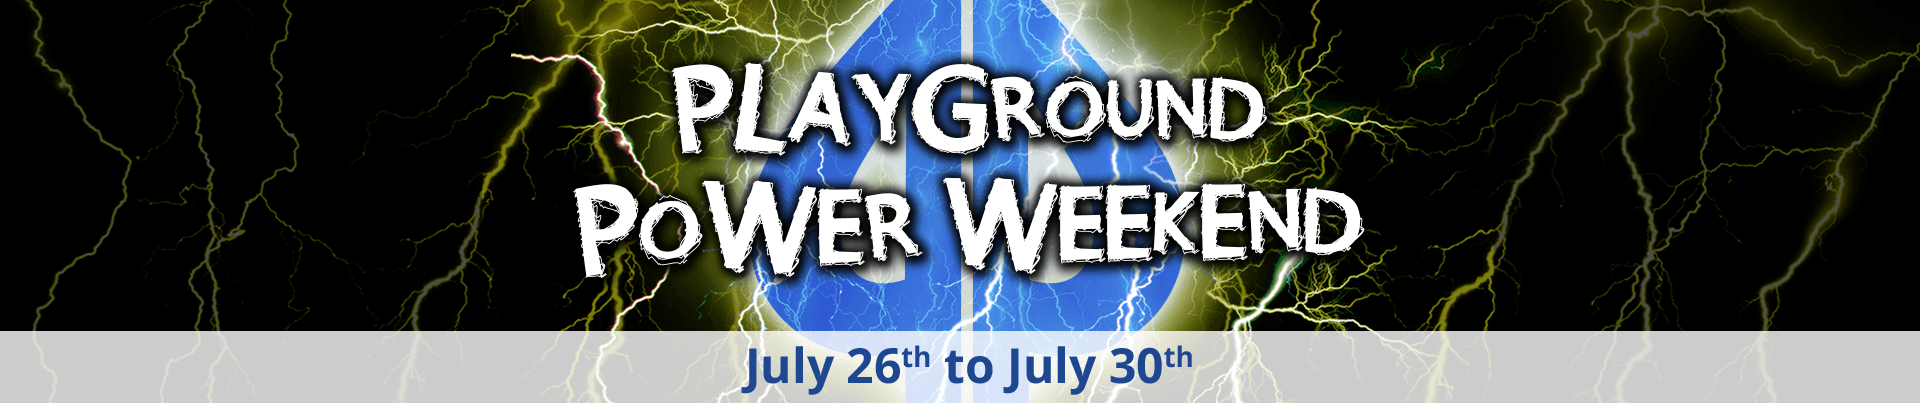 Playground Power Weekend July 2018